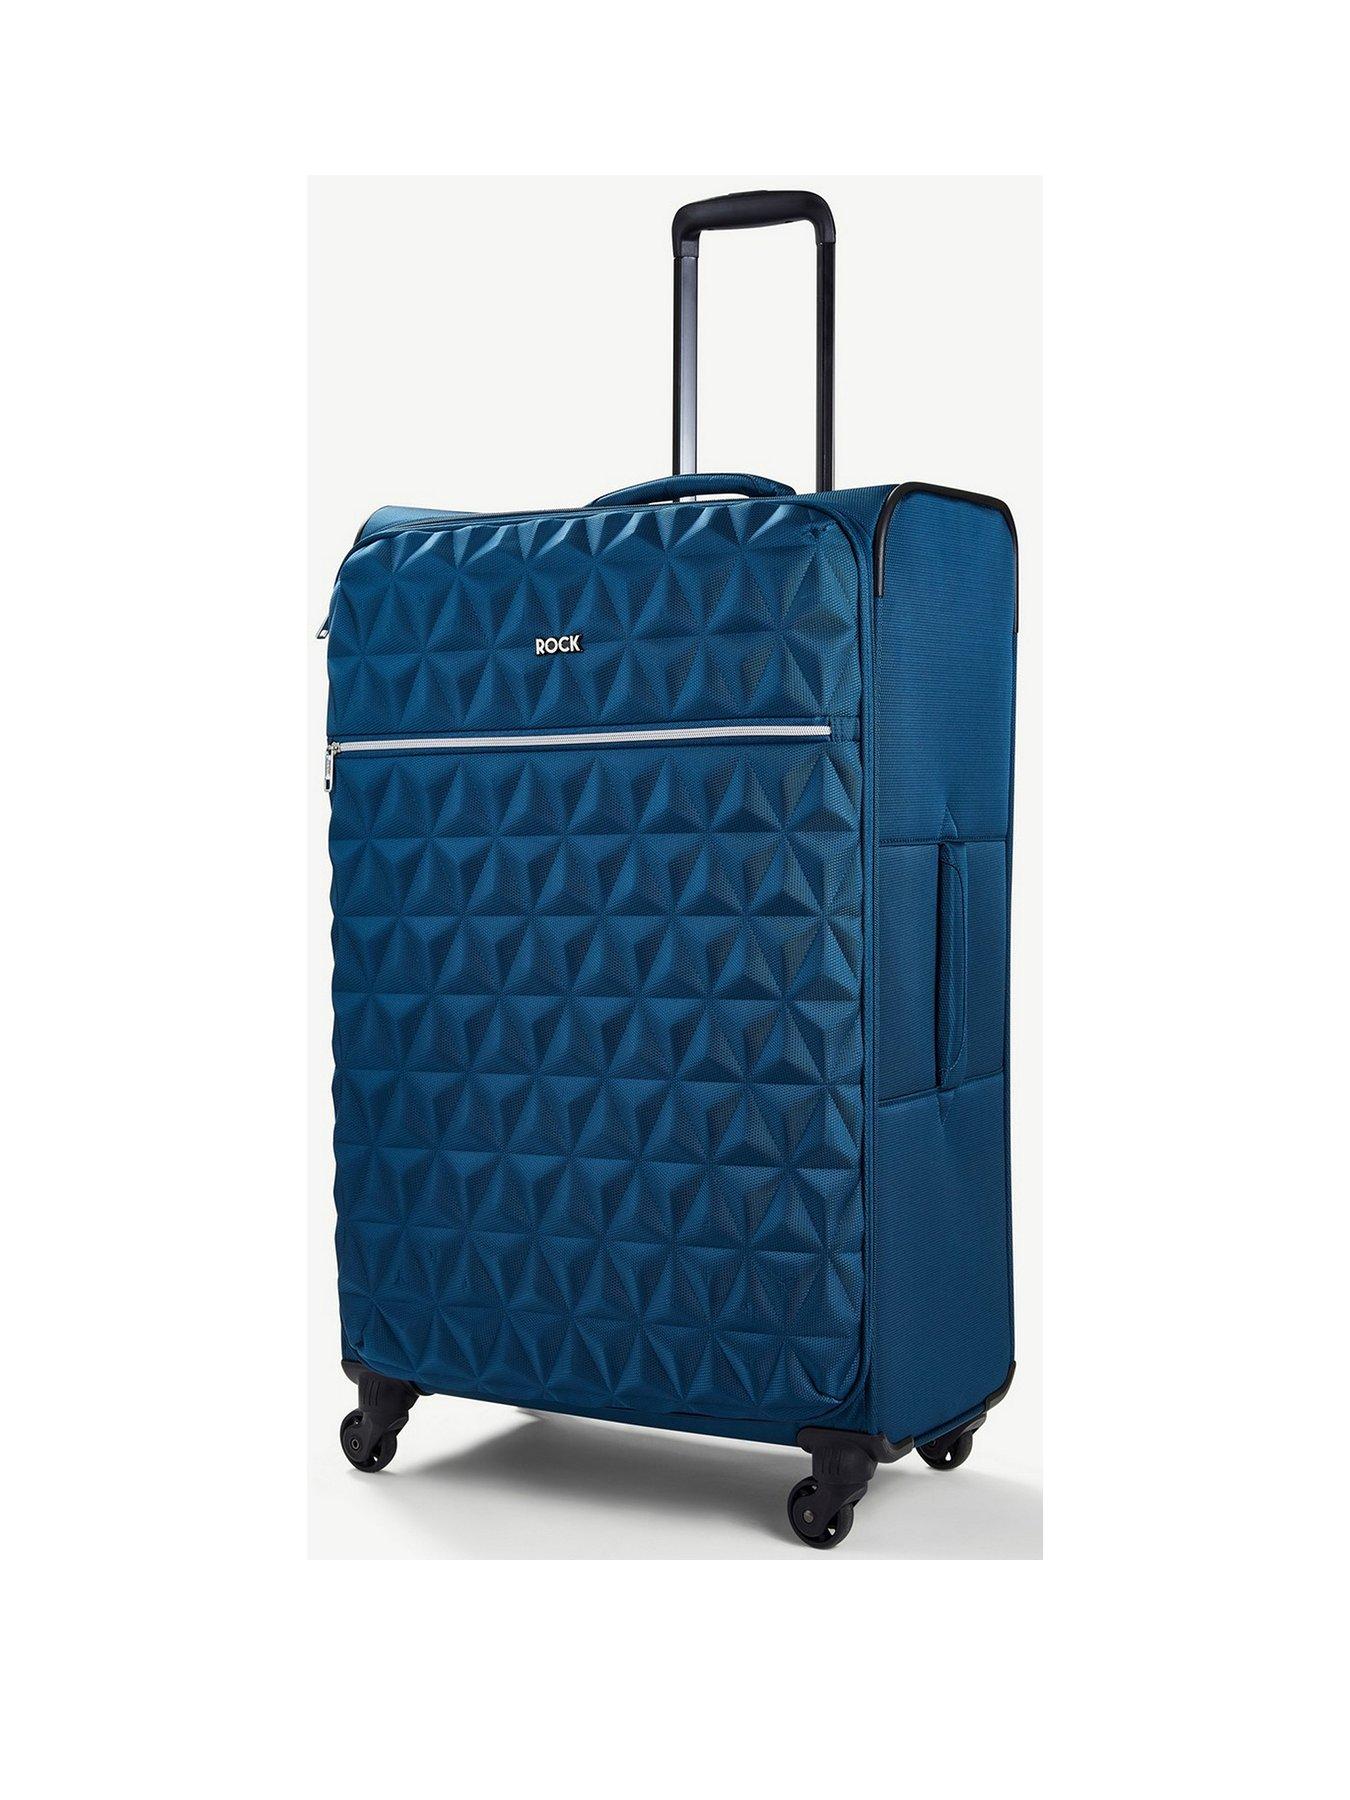 EMBLEM Luggage Supreme 28 (70 cm) Trolley Bag Suitcase 4 Wheel